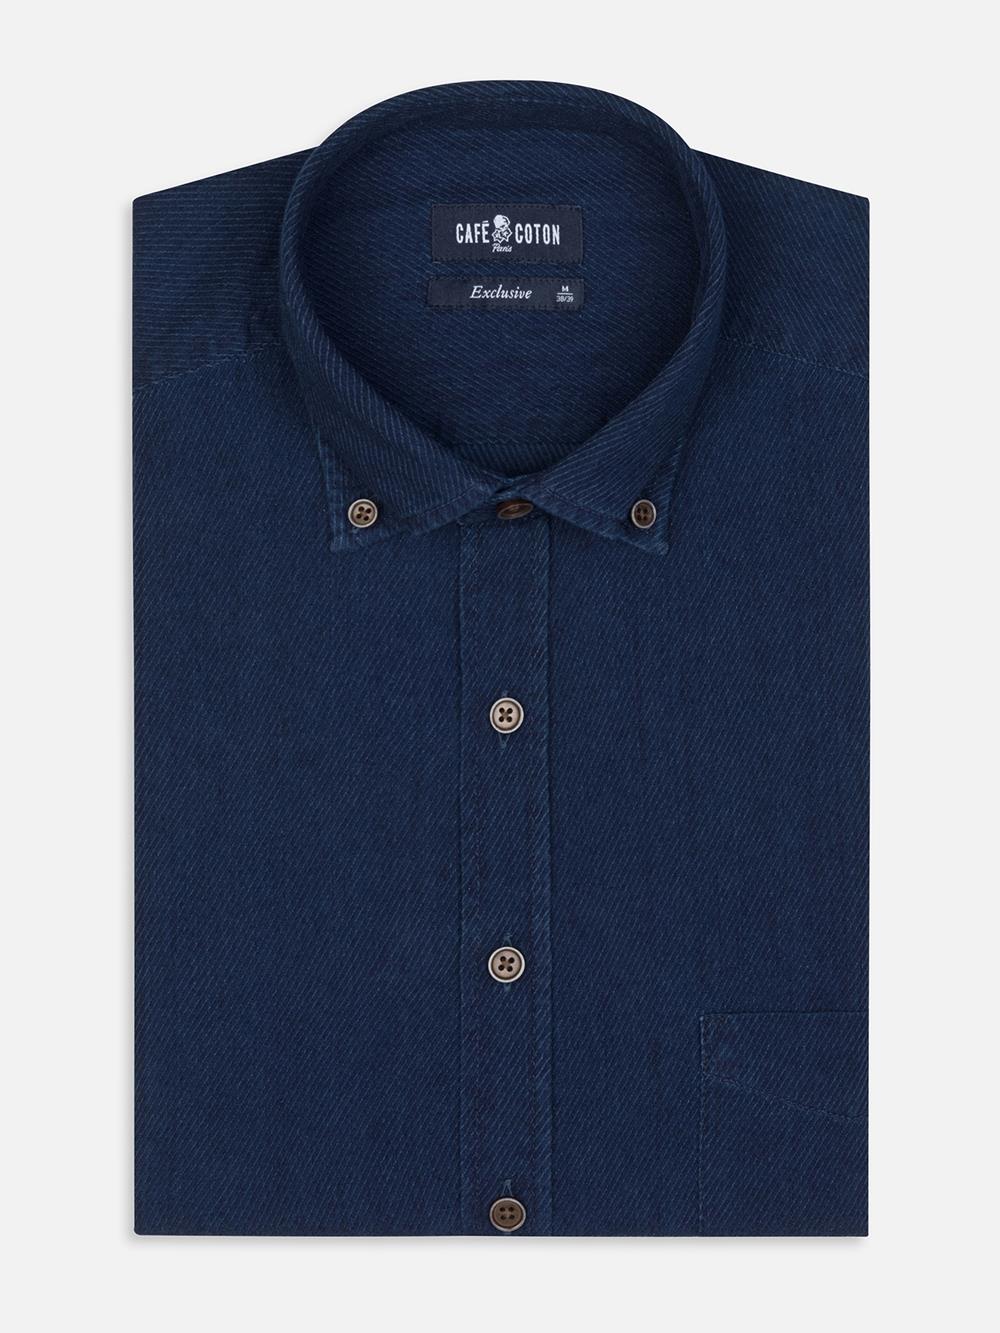 Alford shirt in indigo twill - Button down collar